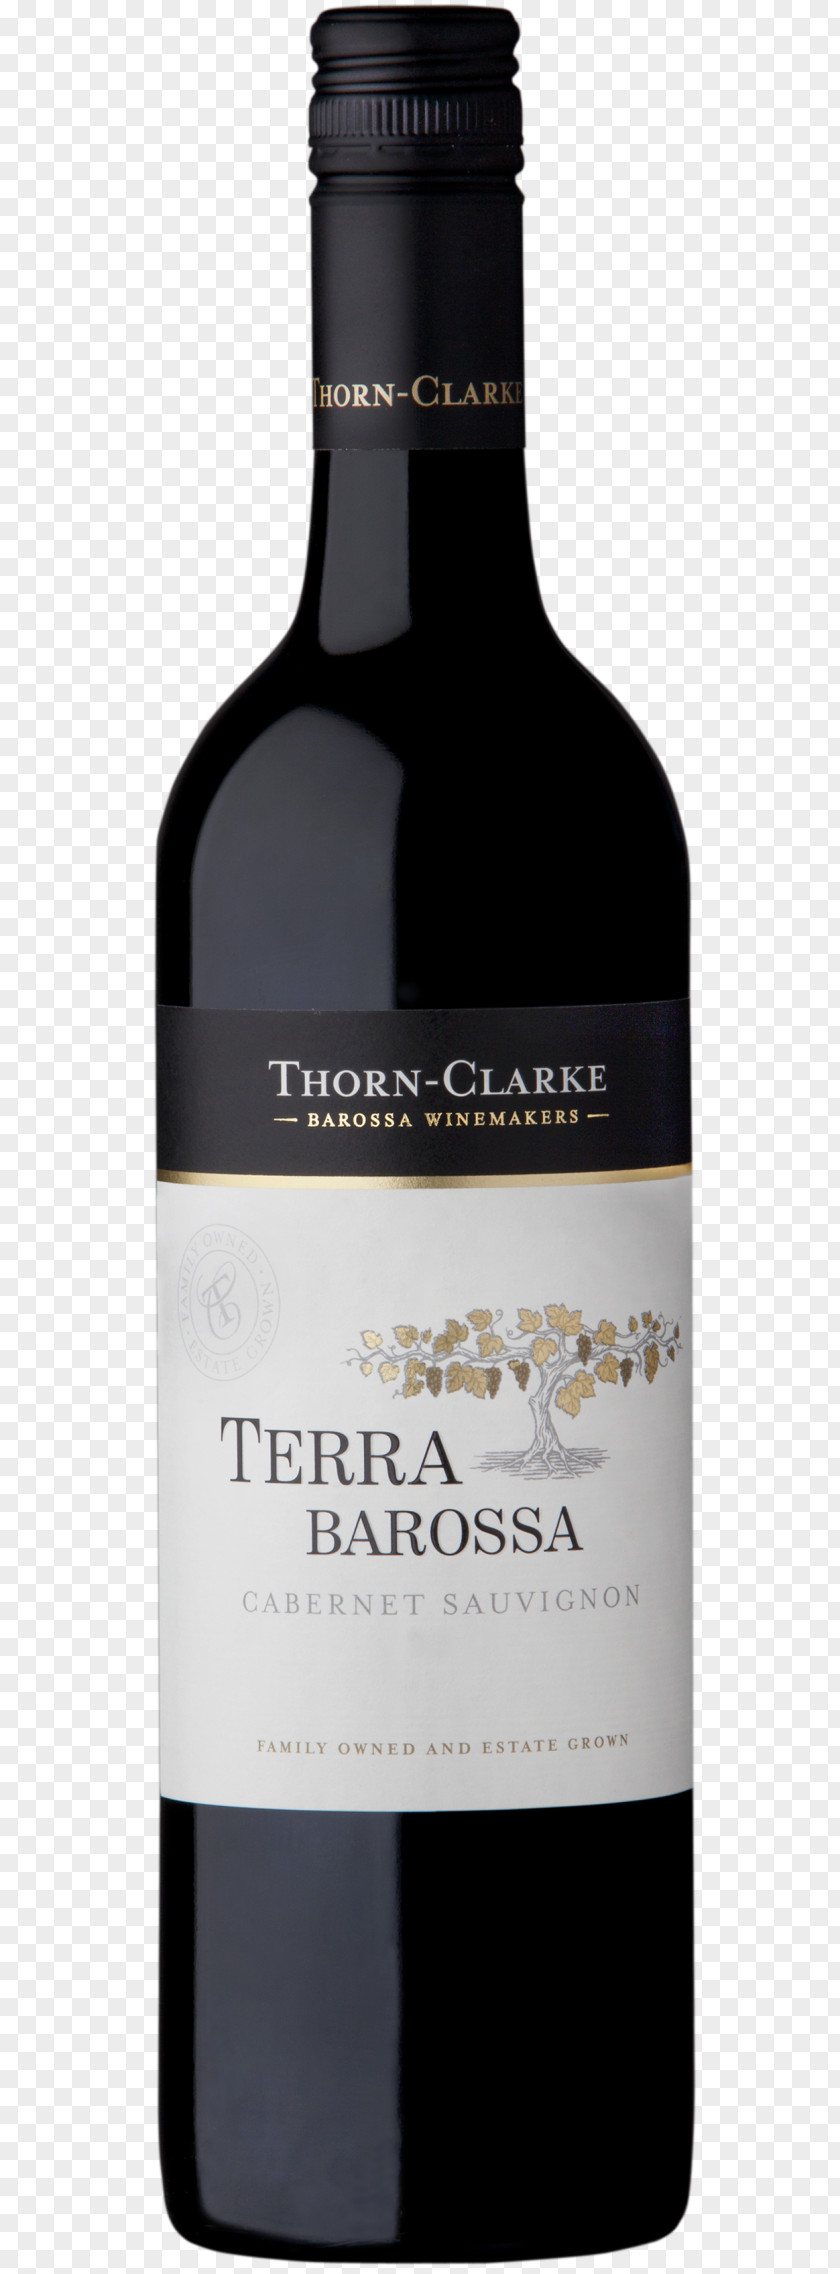 Wine Thorn-Clarke Wines Shiraz Barossa Valley Cabernet Sauvignon PNG